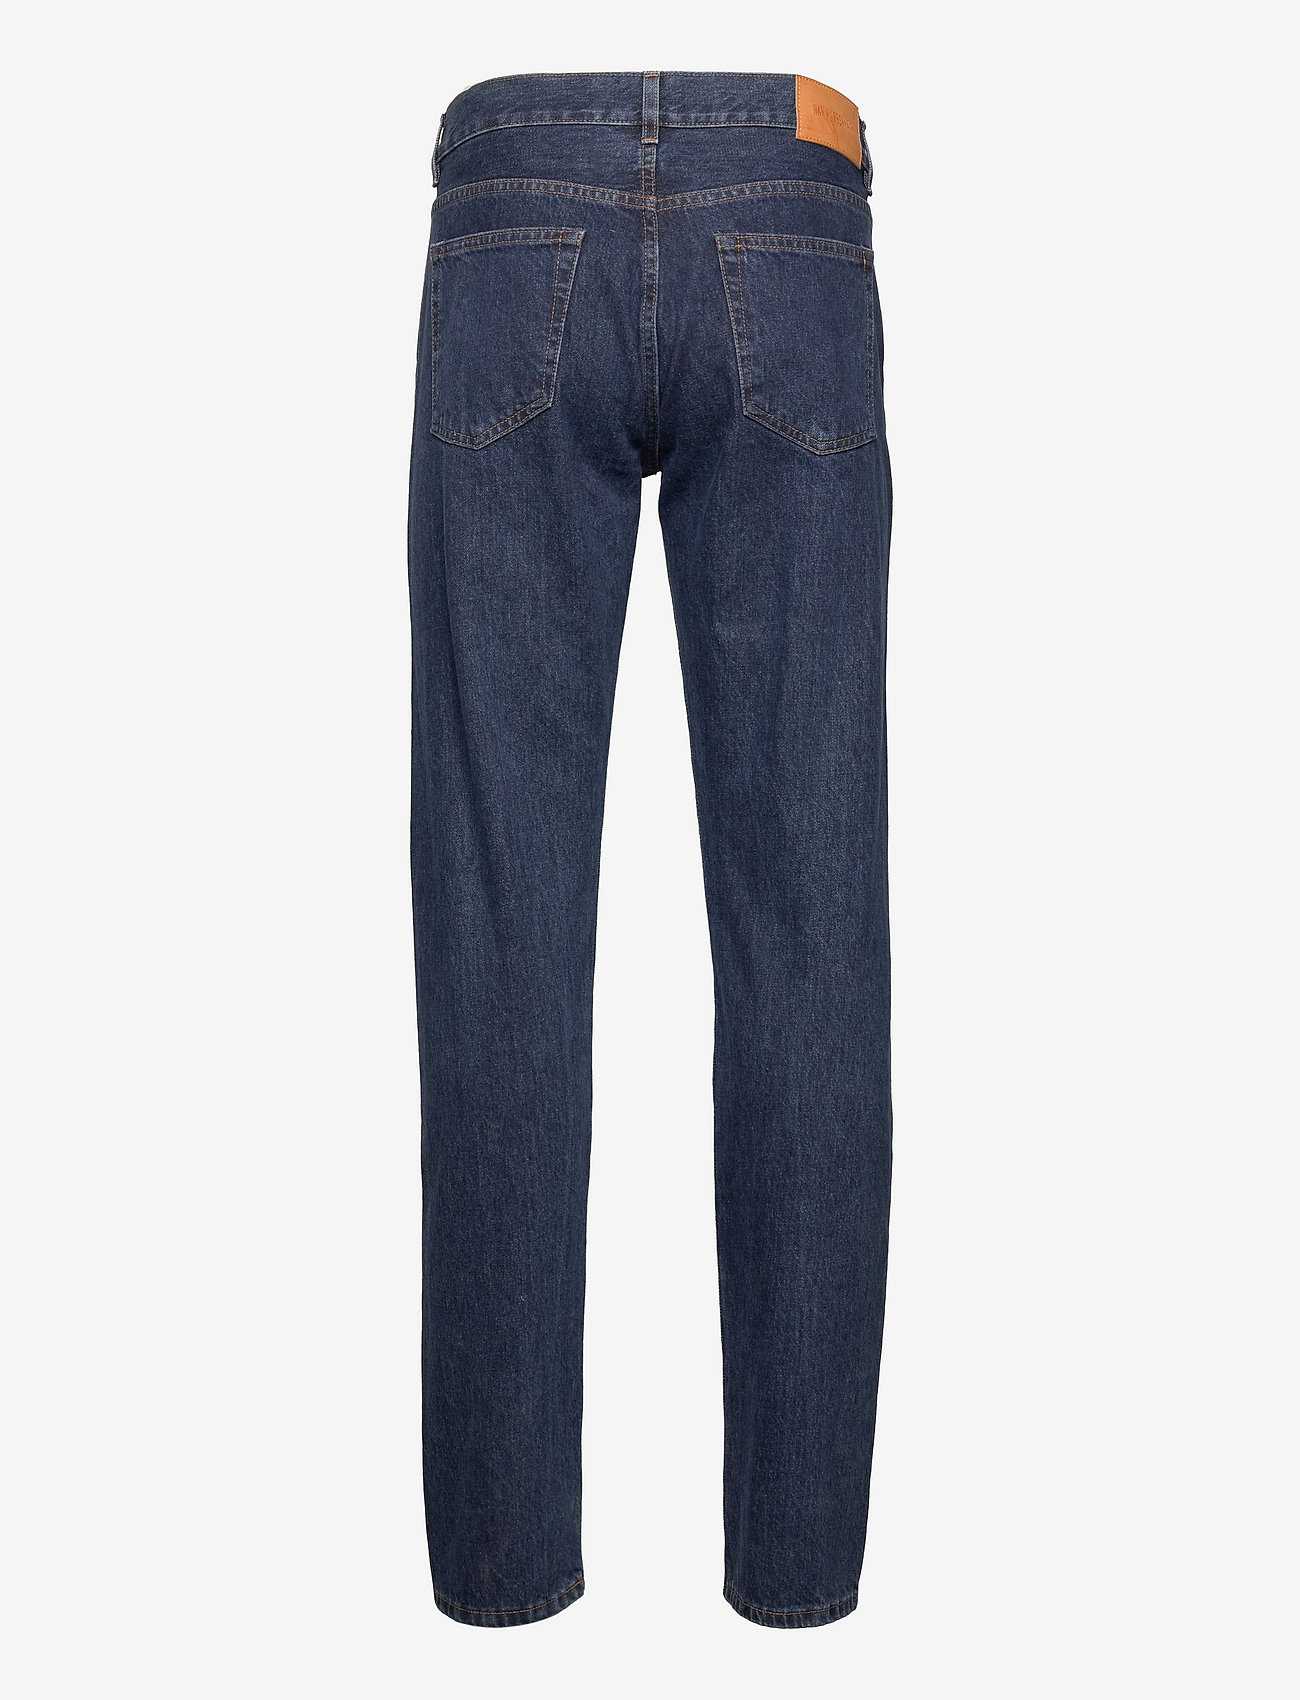 HAN Kjøbenhavn - Tapered Jeans - džinsi - medium blue - 1